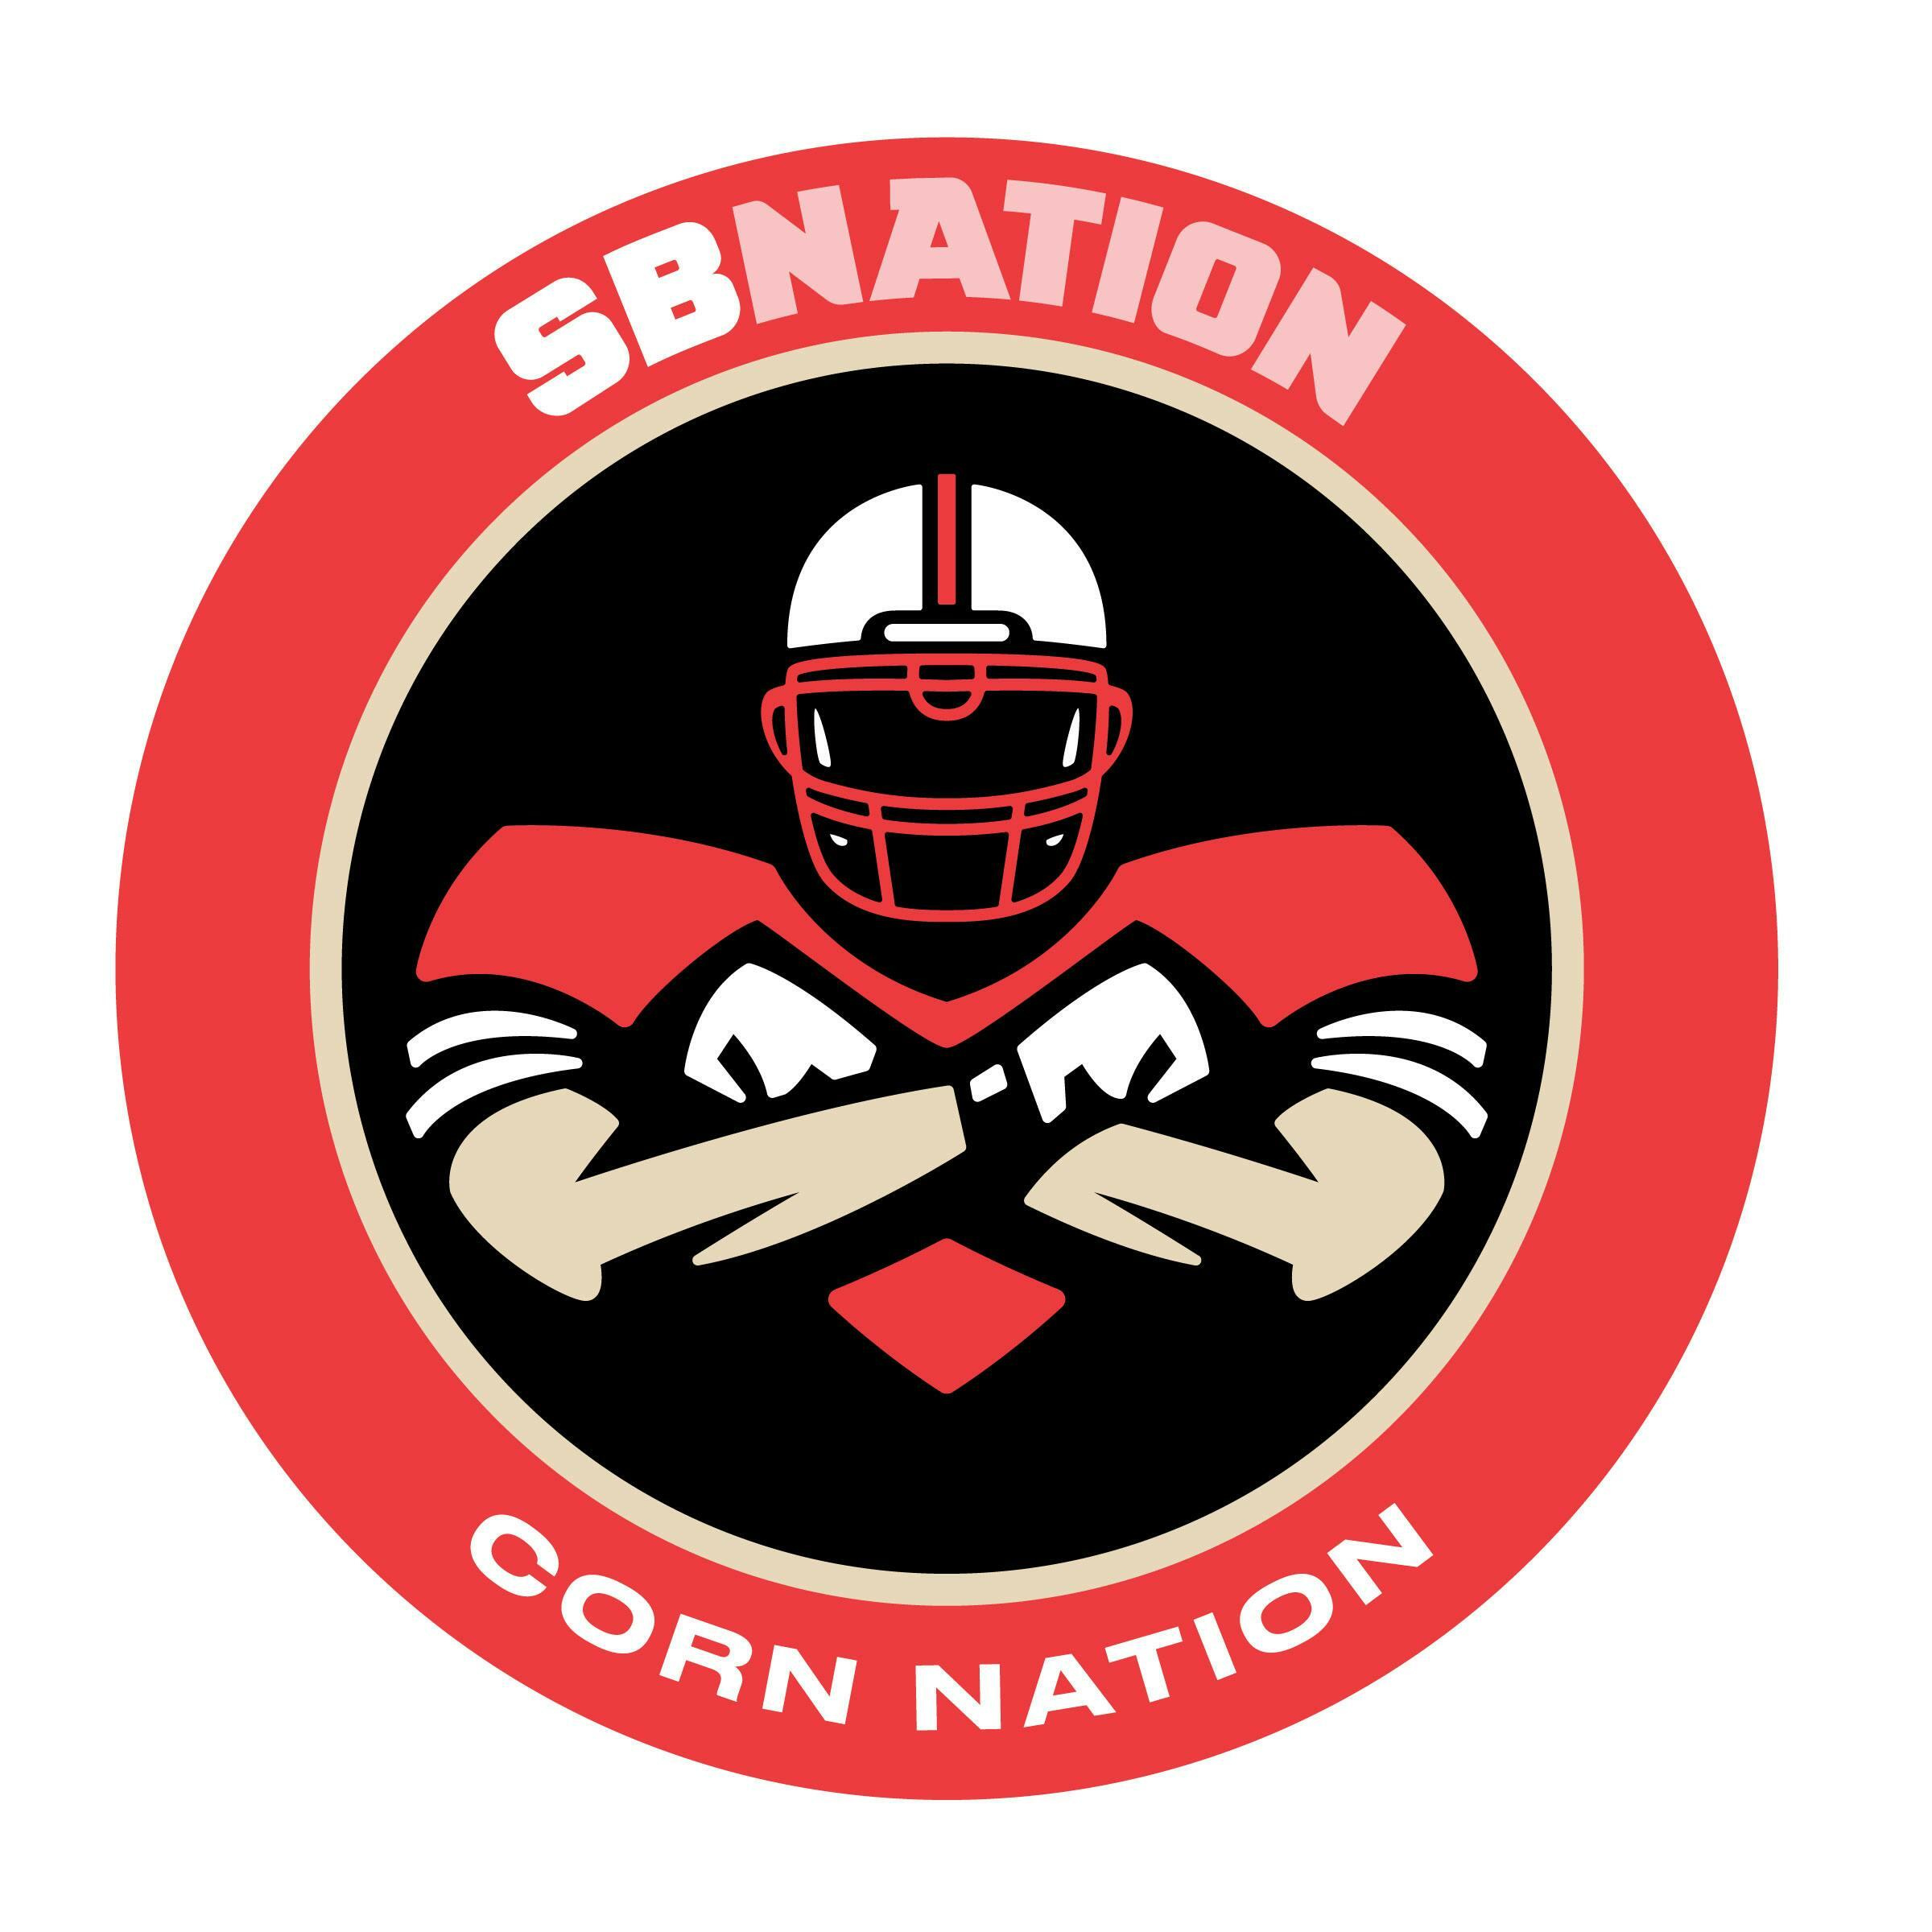 Corn nation - youtube